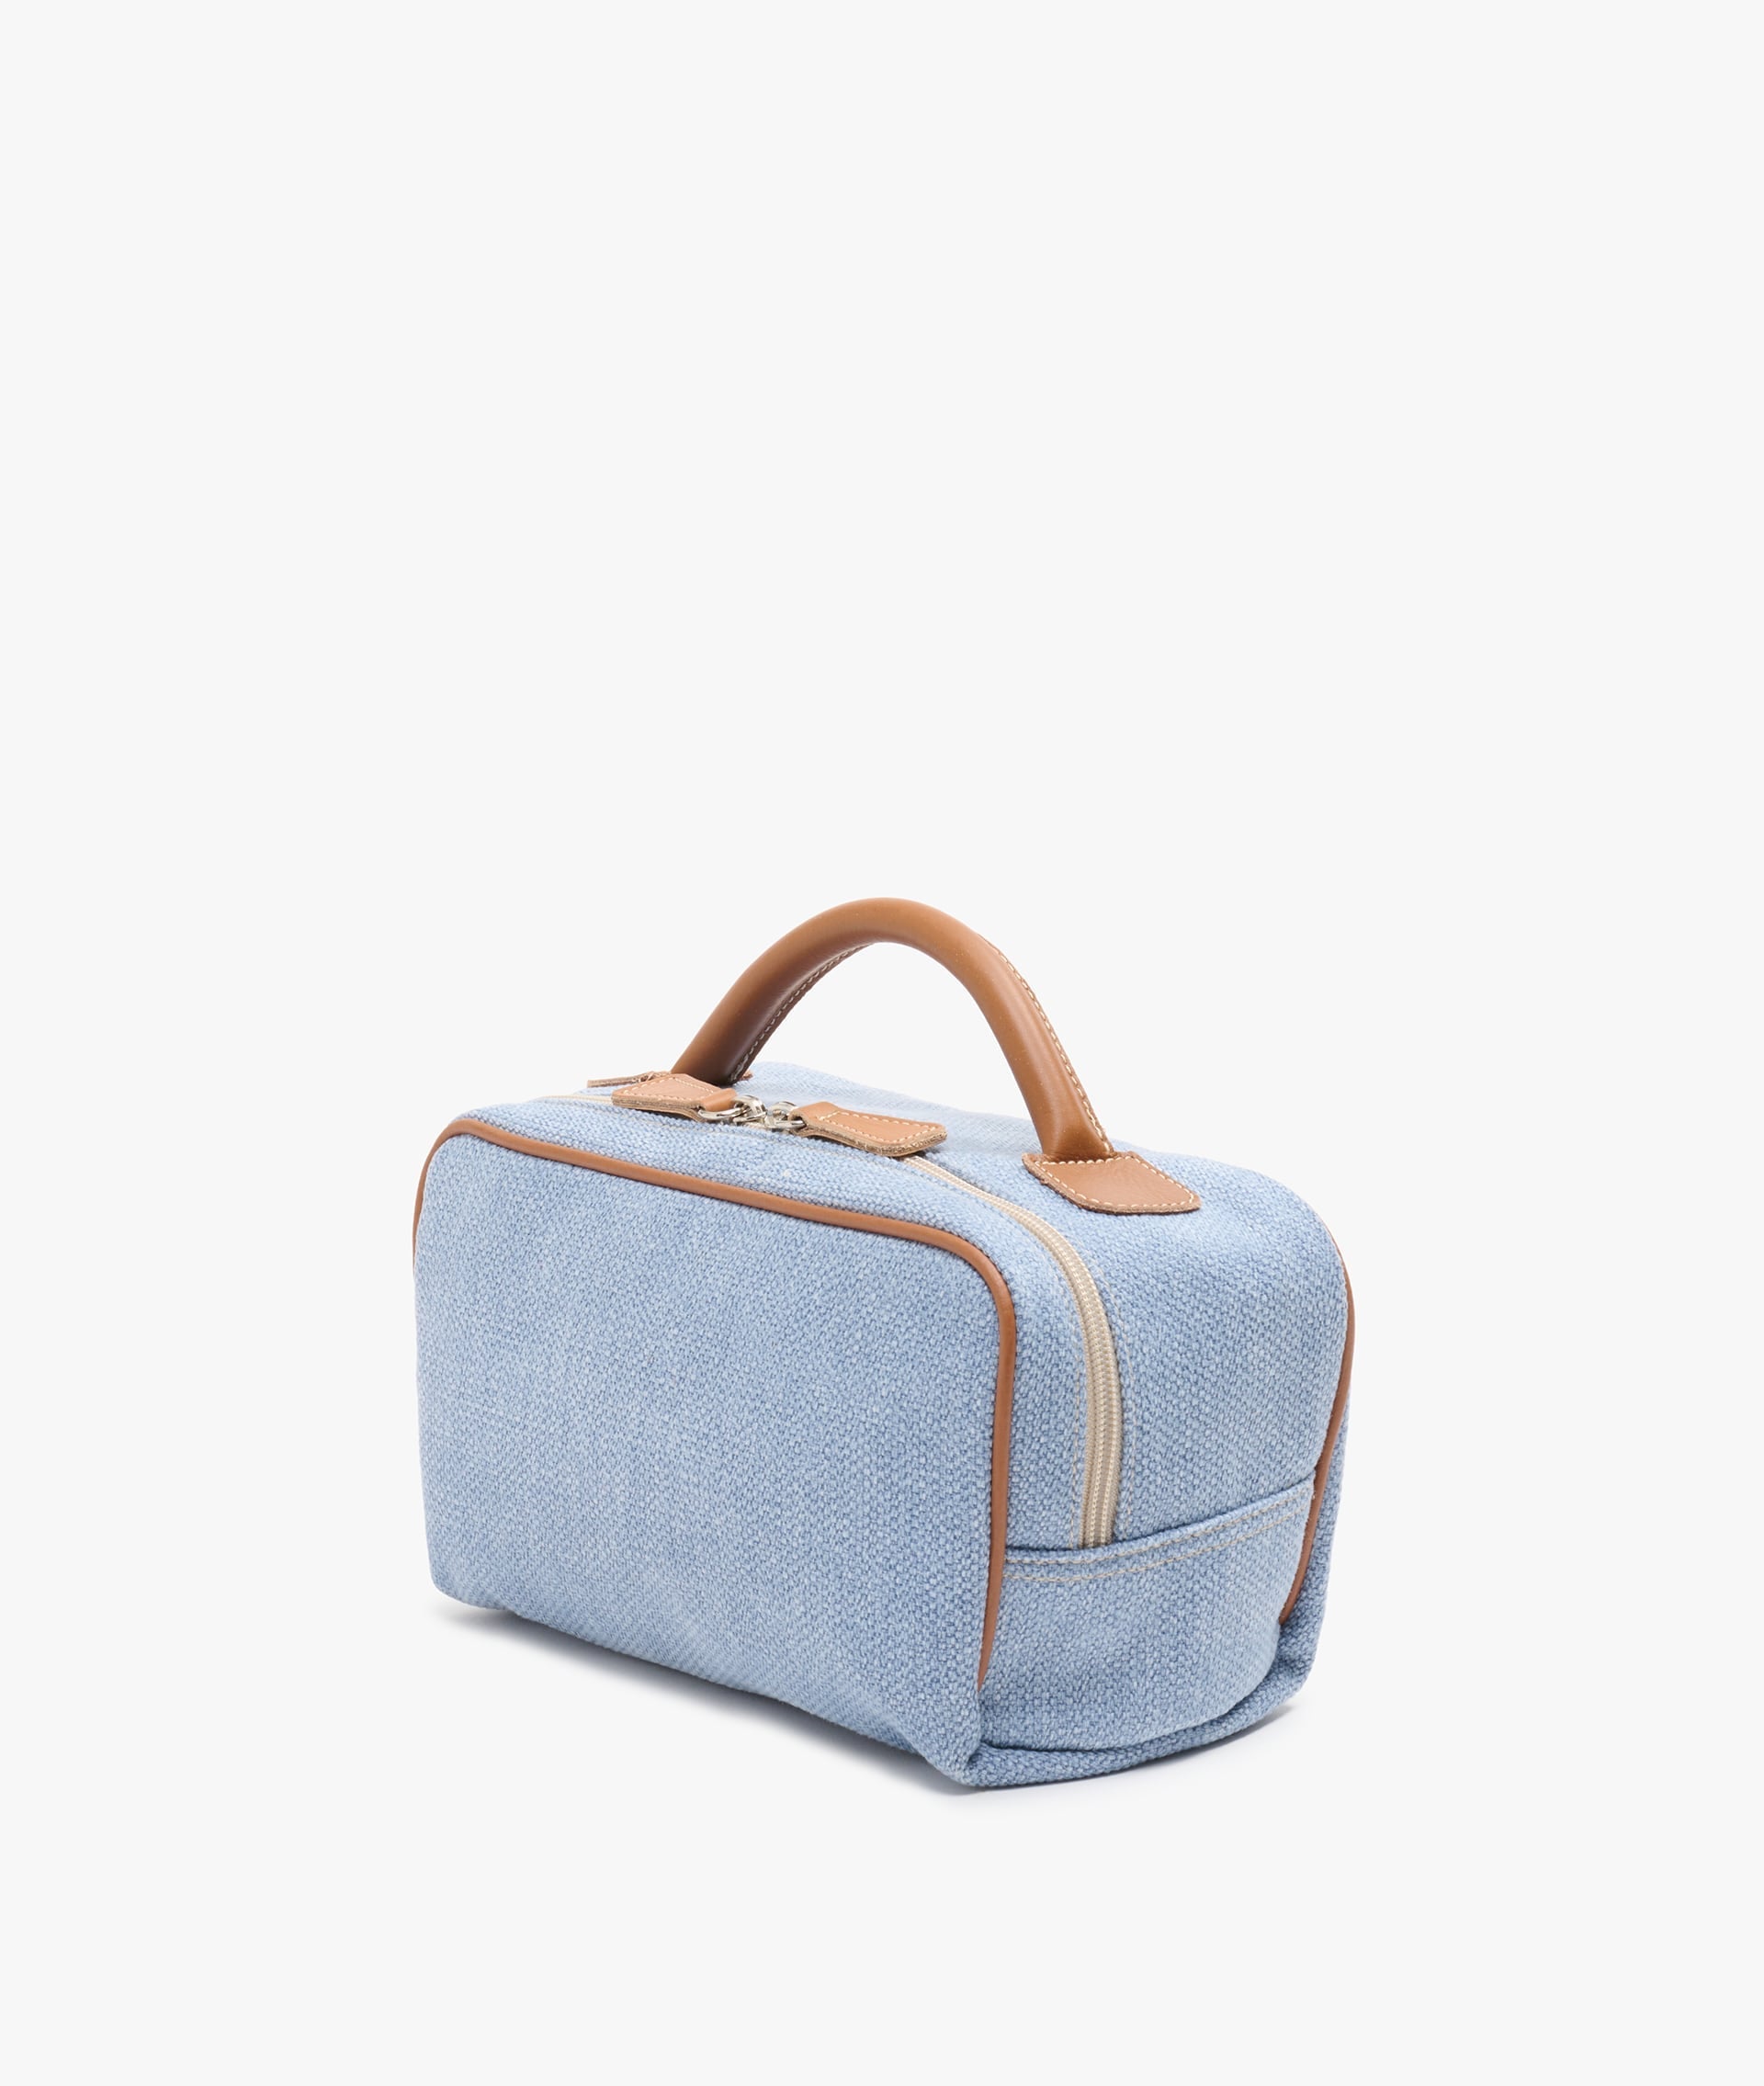 My Style Bags Berkeley Ischia Cosmetic Bag Light Blue